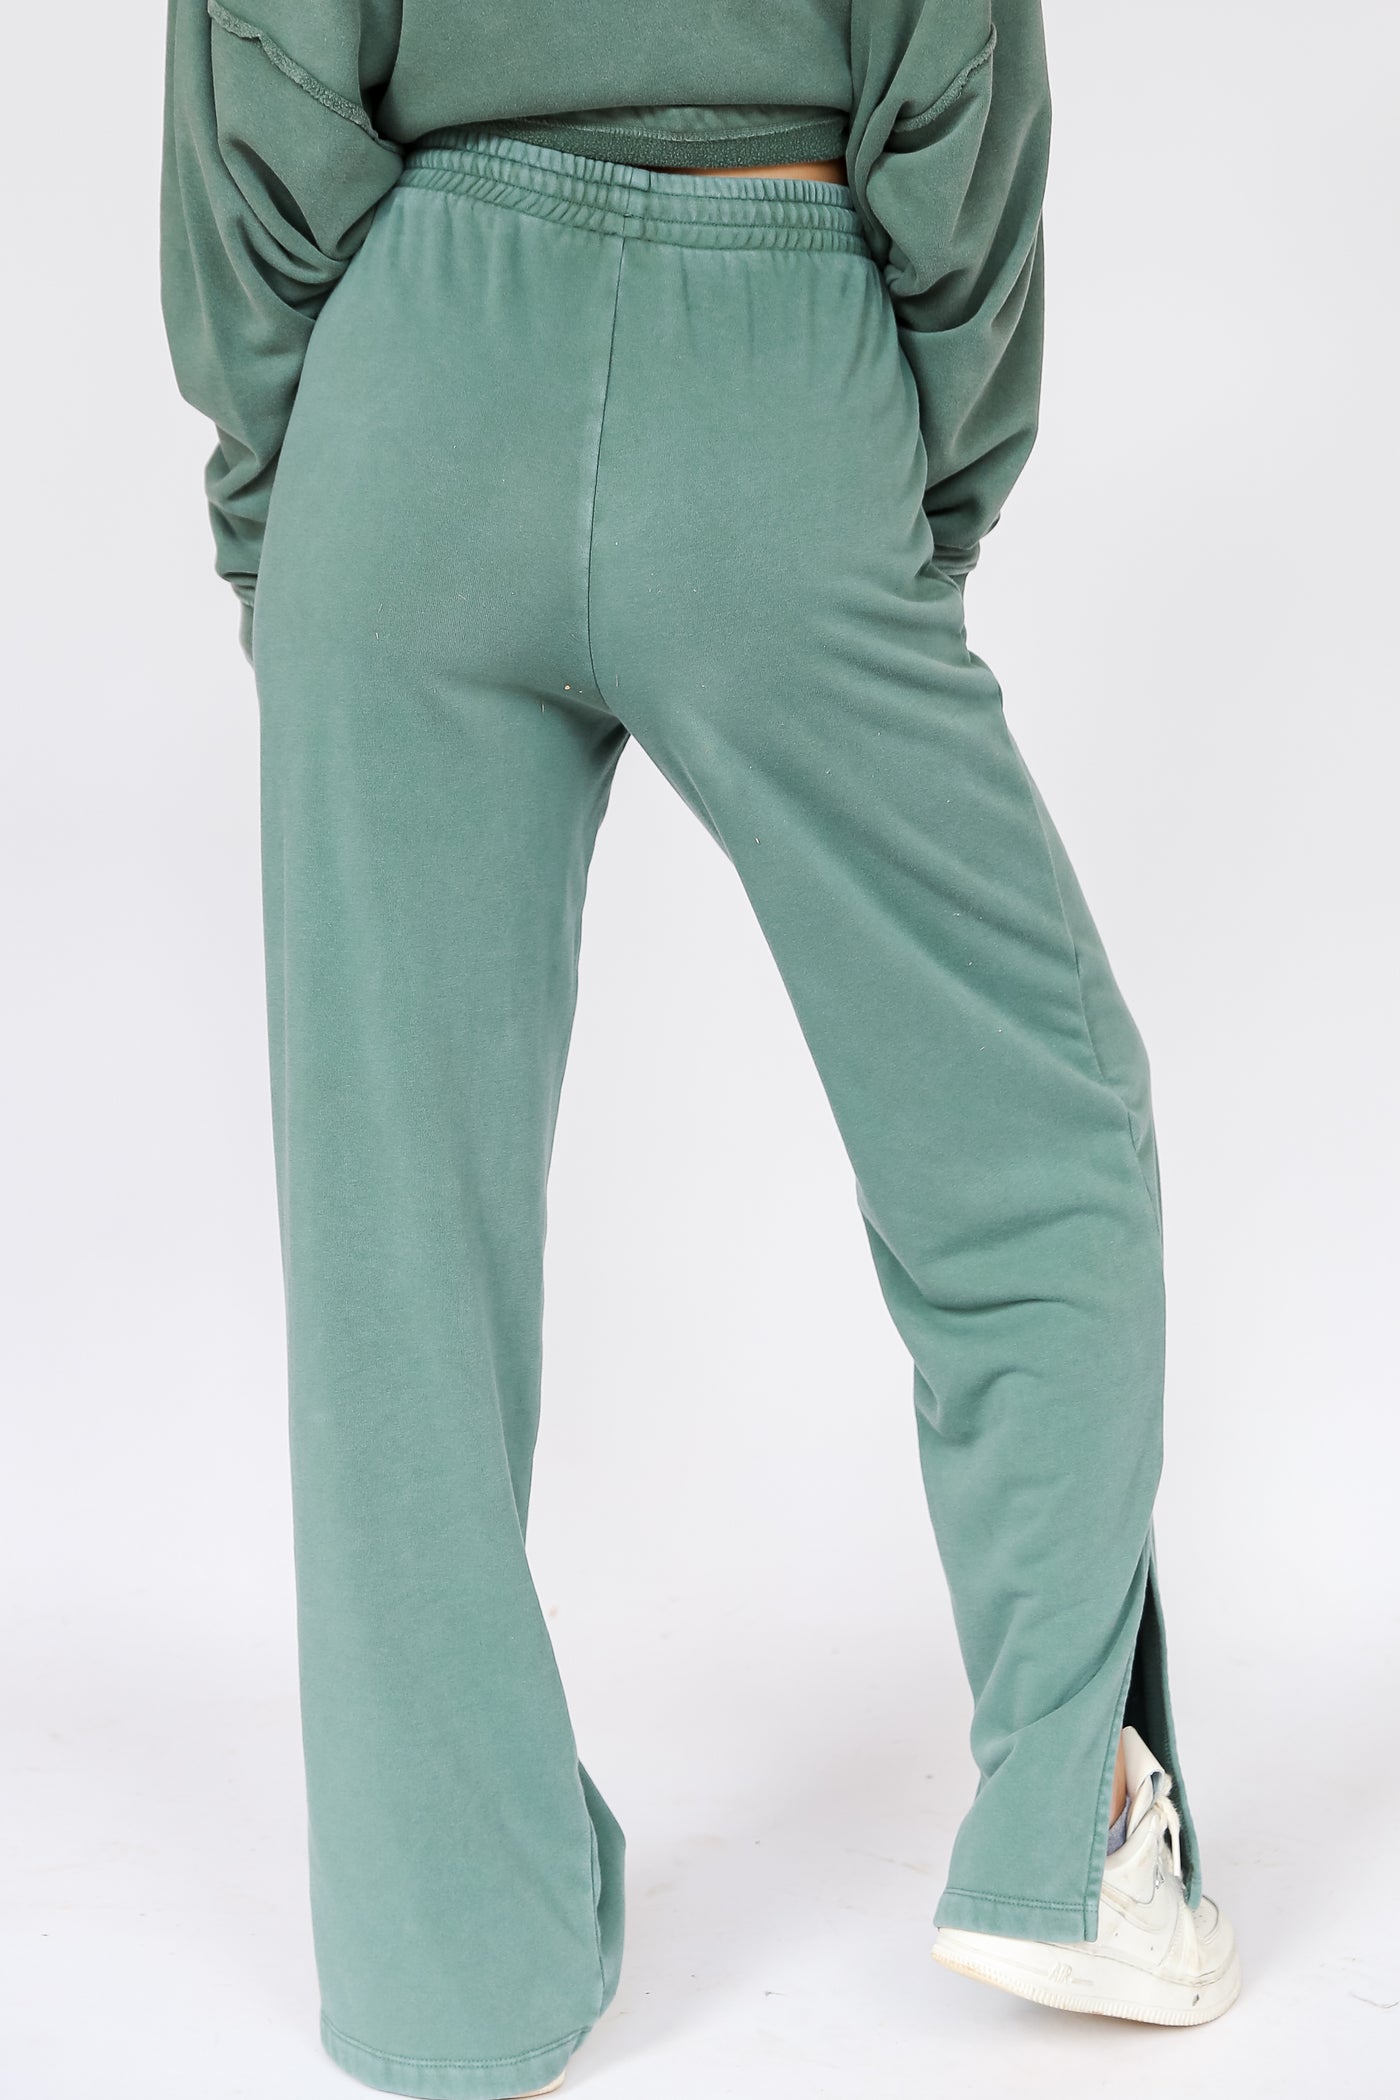 sage green Fleece Lounge Pants back view